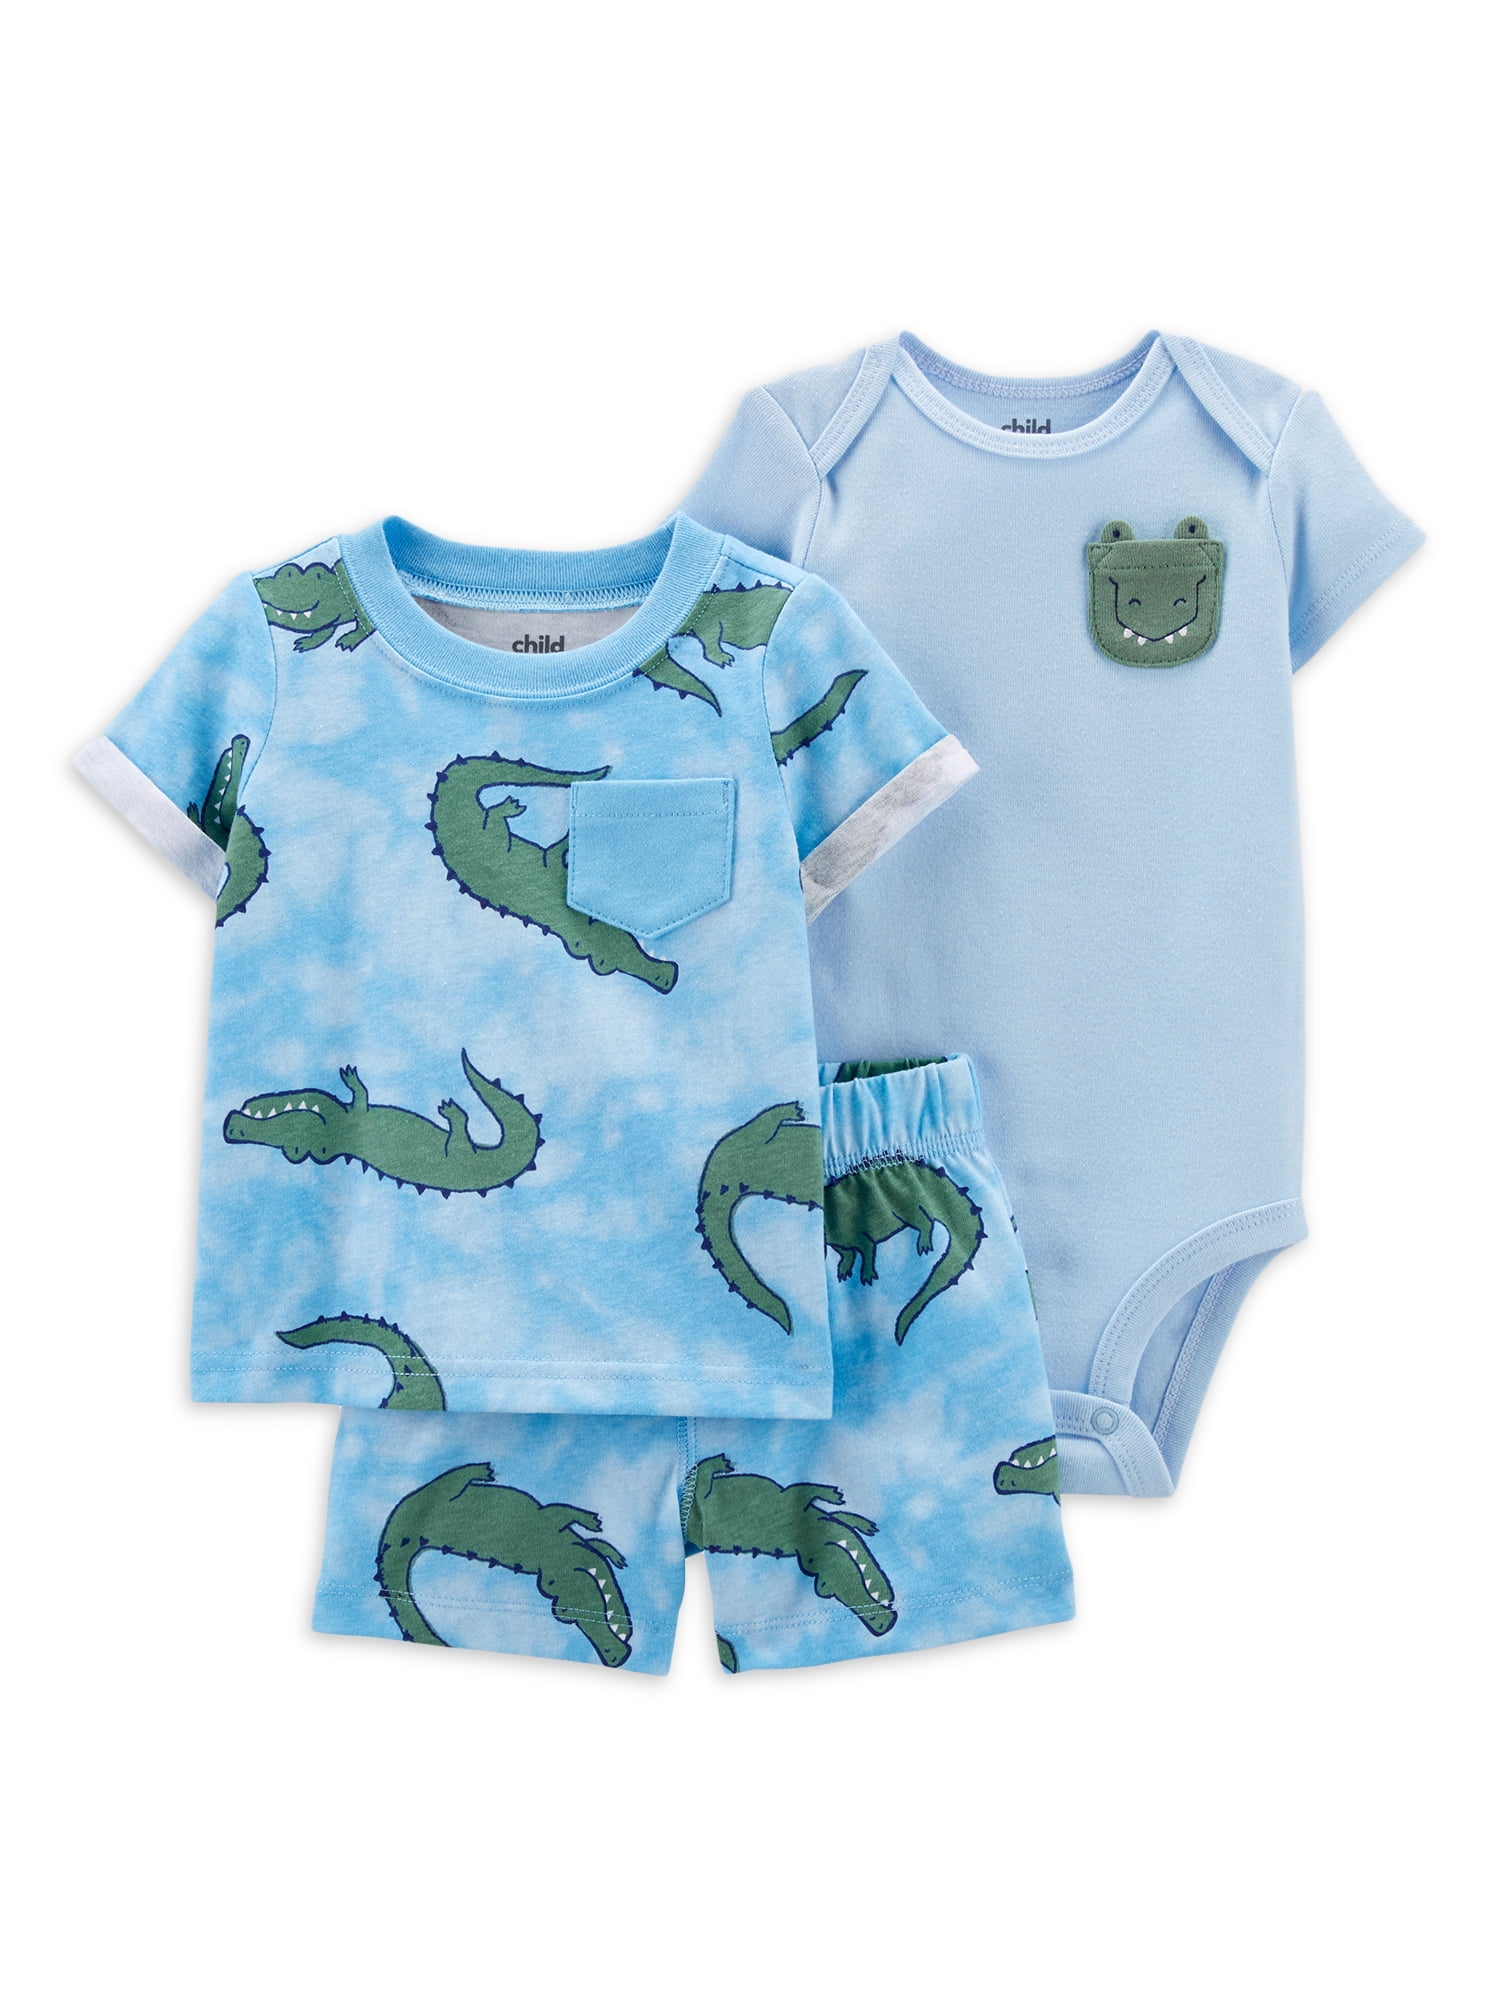 Baby Boys 5 Piece Dinosaur Theme Layette Set 0 3 Months